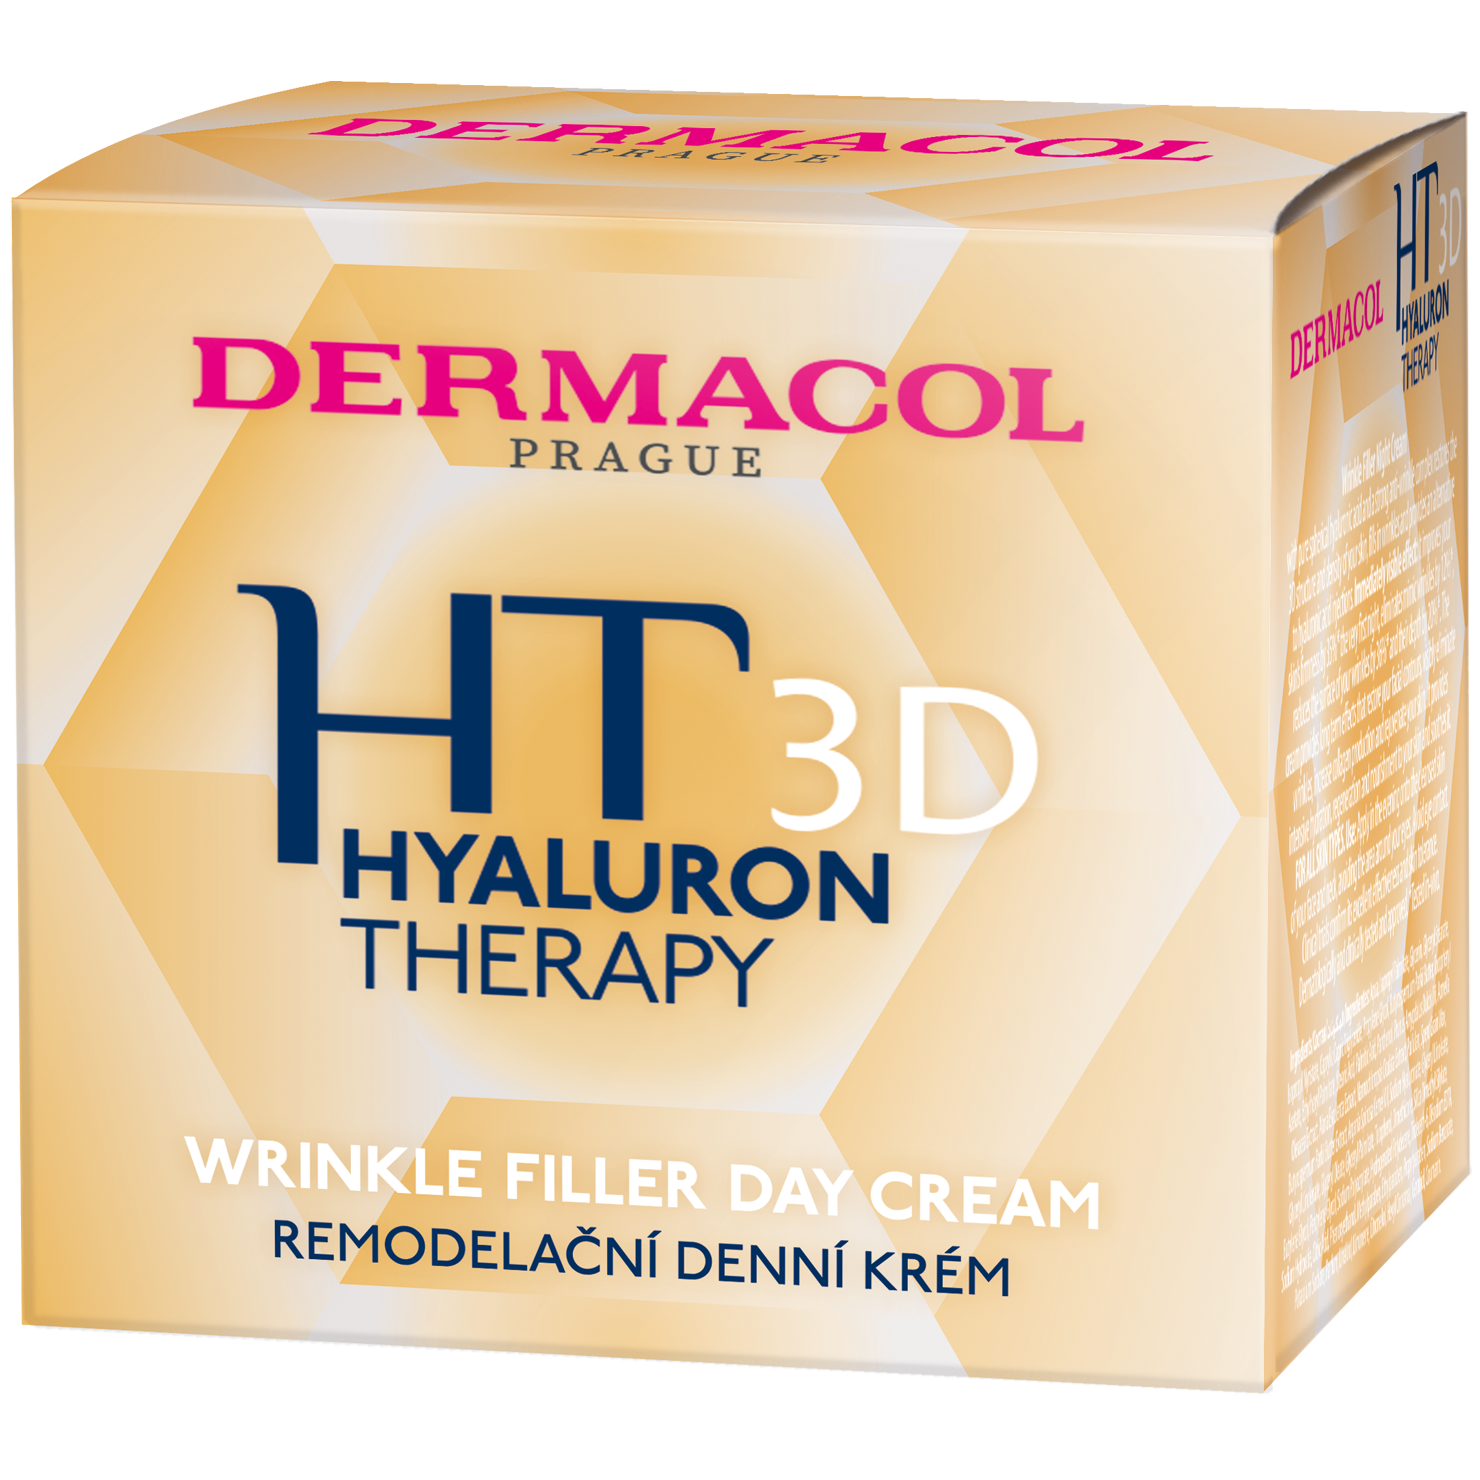 Мозг терапи отзывы покупателей и врачей. Dermacol крем Hyaluron Therapy Eye & Lip Wrinkle Filler Cream. Krem s oslom отзывы.